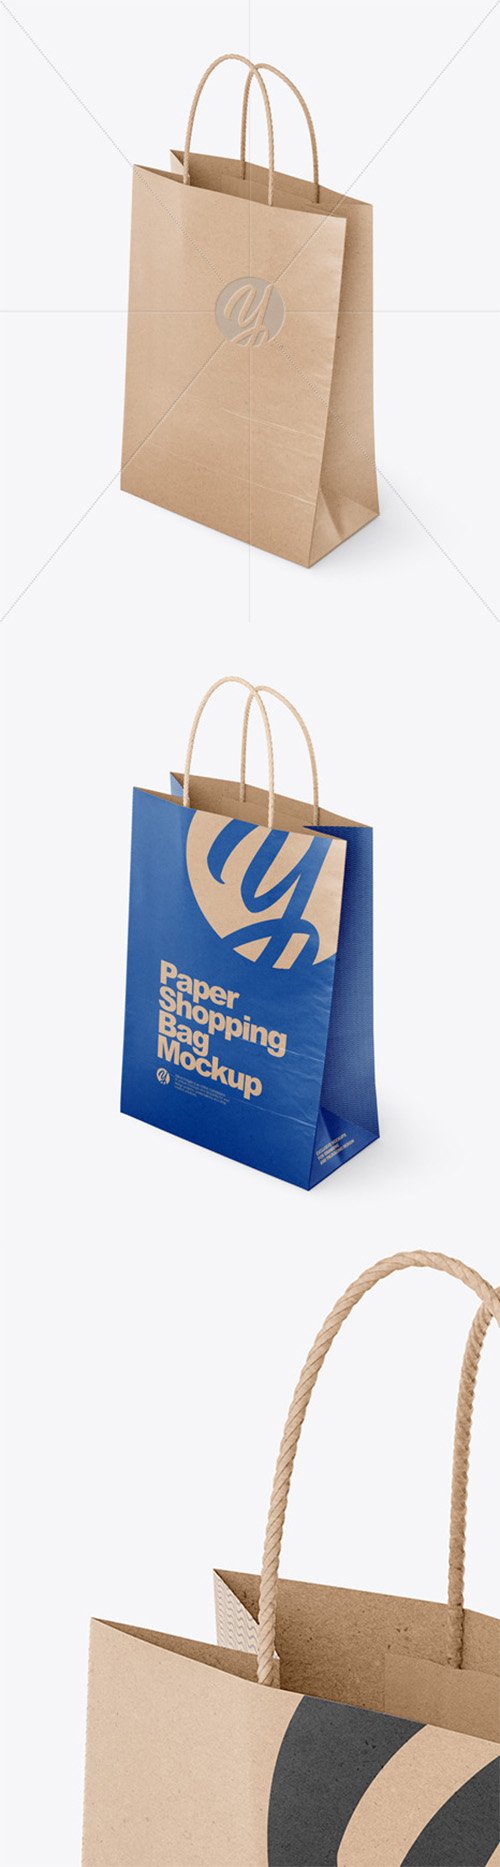 Download Kraft Paper Shopping Bag Mockup Half Side View 79882 Mockups Free Psd Templates